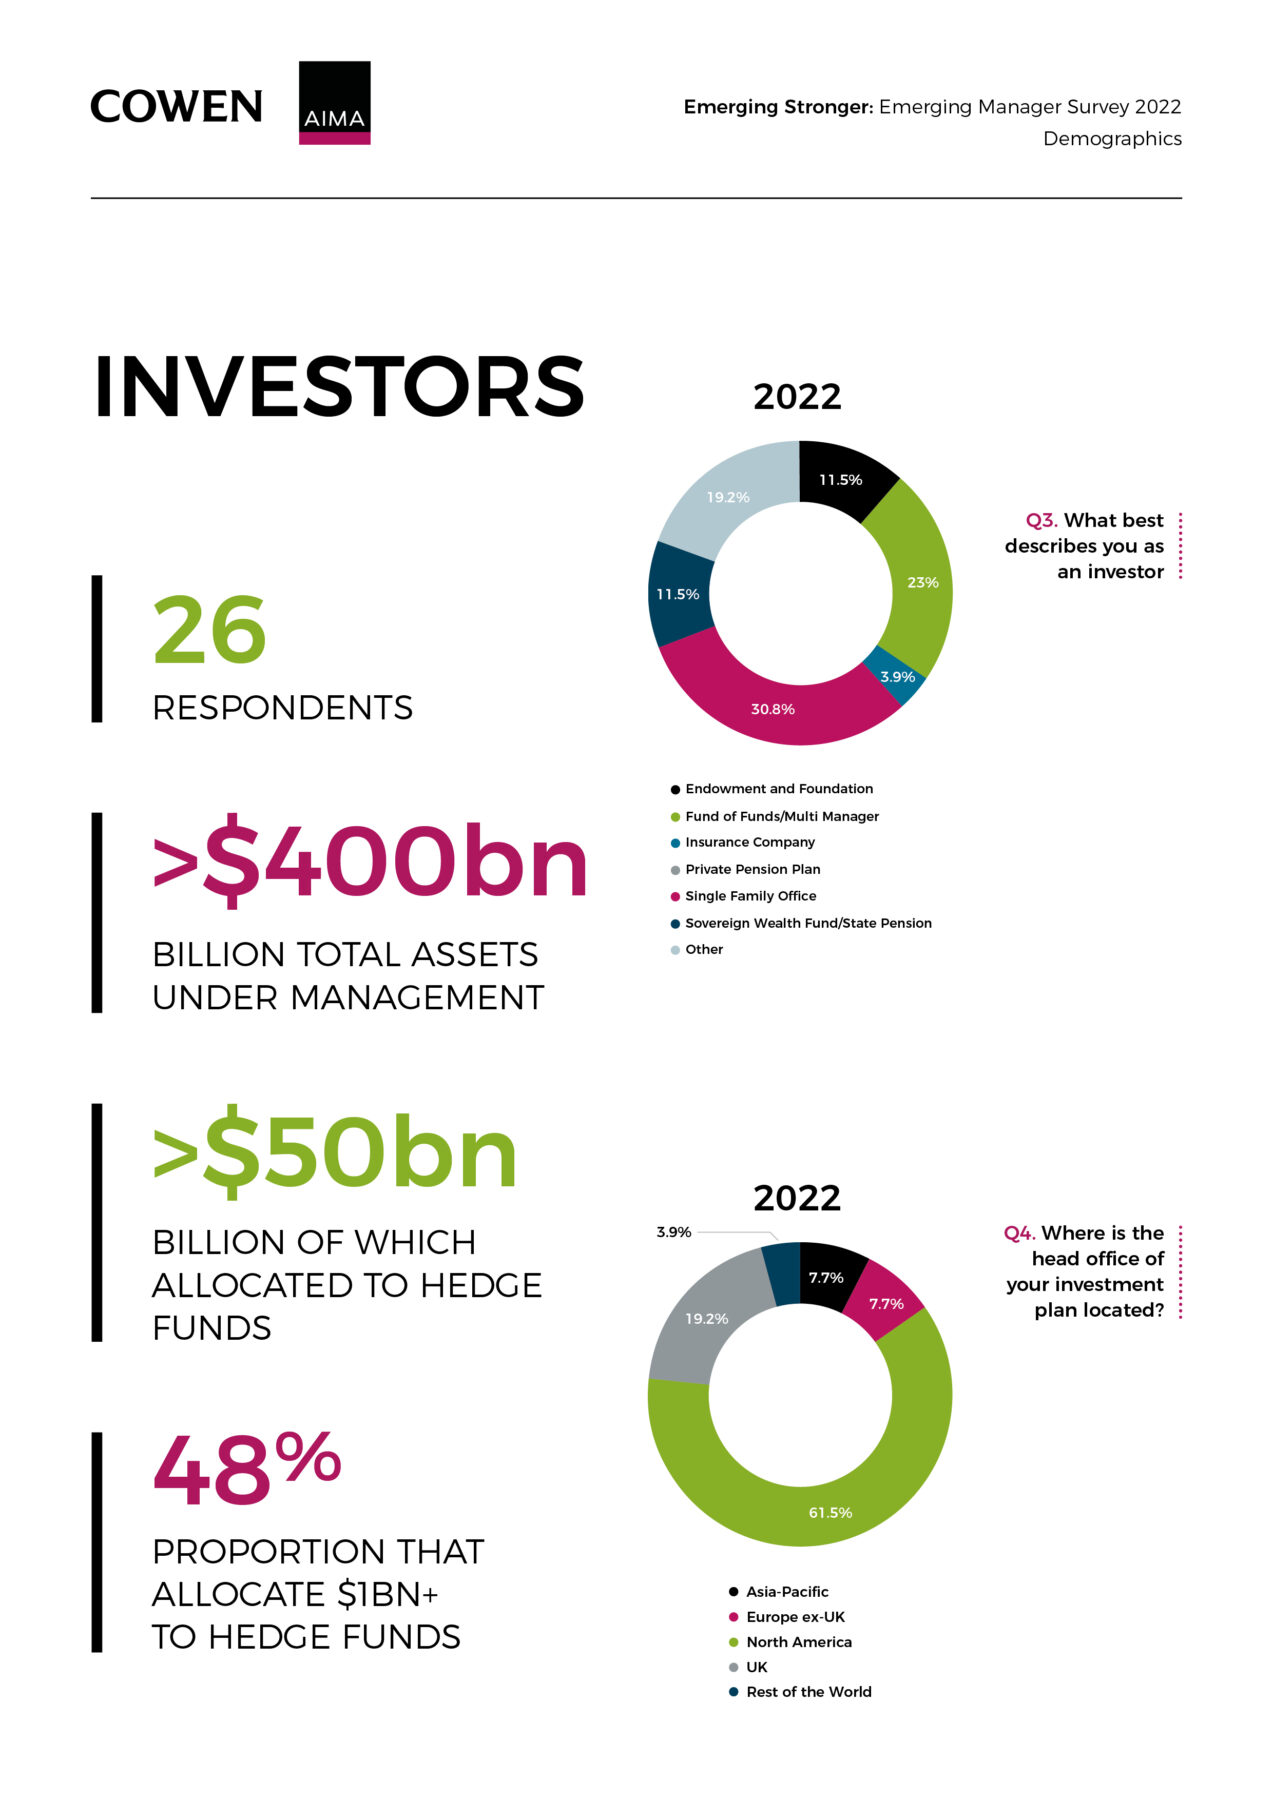 Cowen / AIMA Emerging Manager Survey 2022 Investors